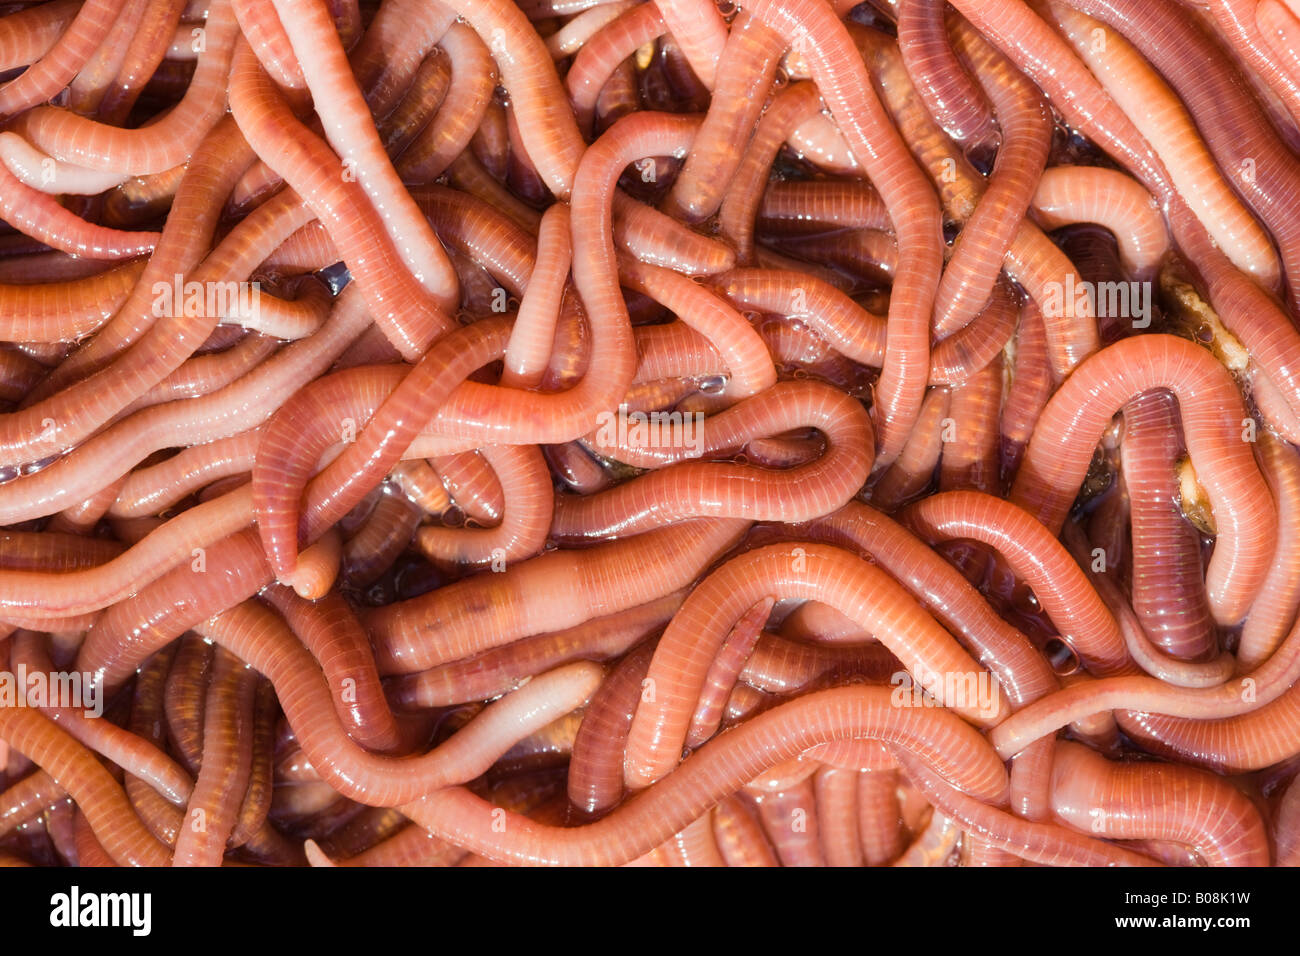 https://c8.alamy.com/comp/B08K1W/mass-of-earthworms-uk-B08K1W.jpg